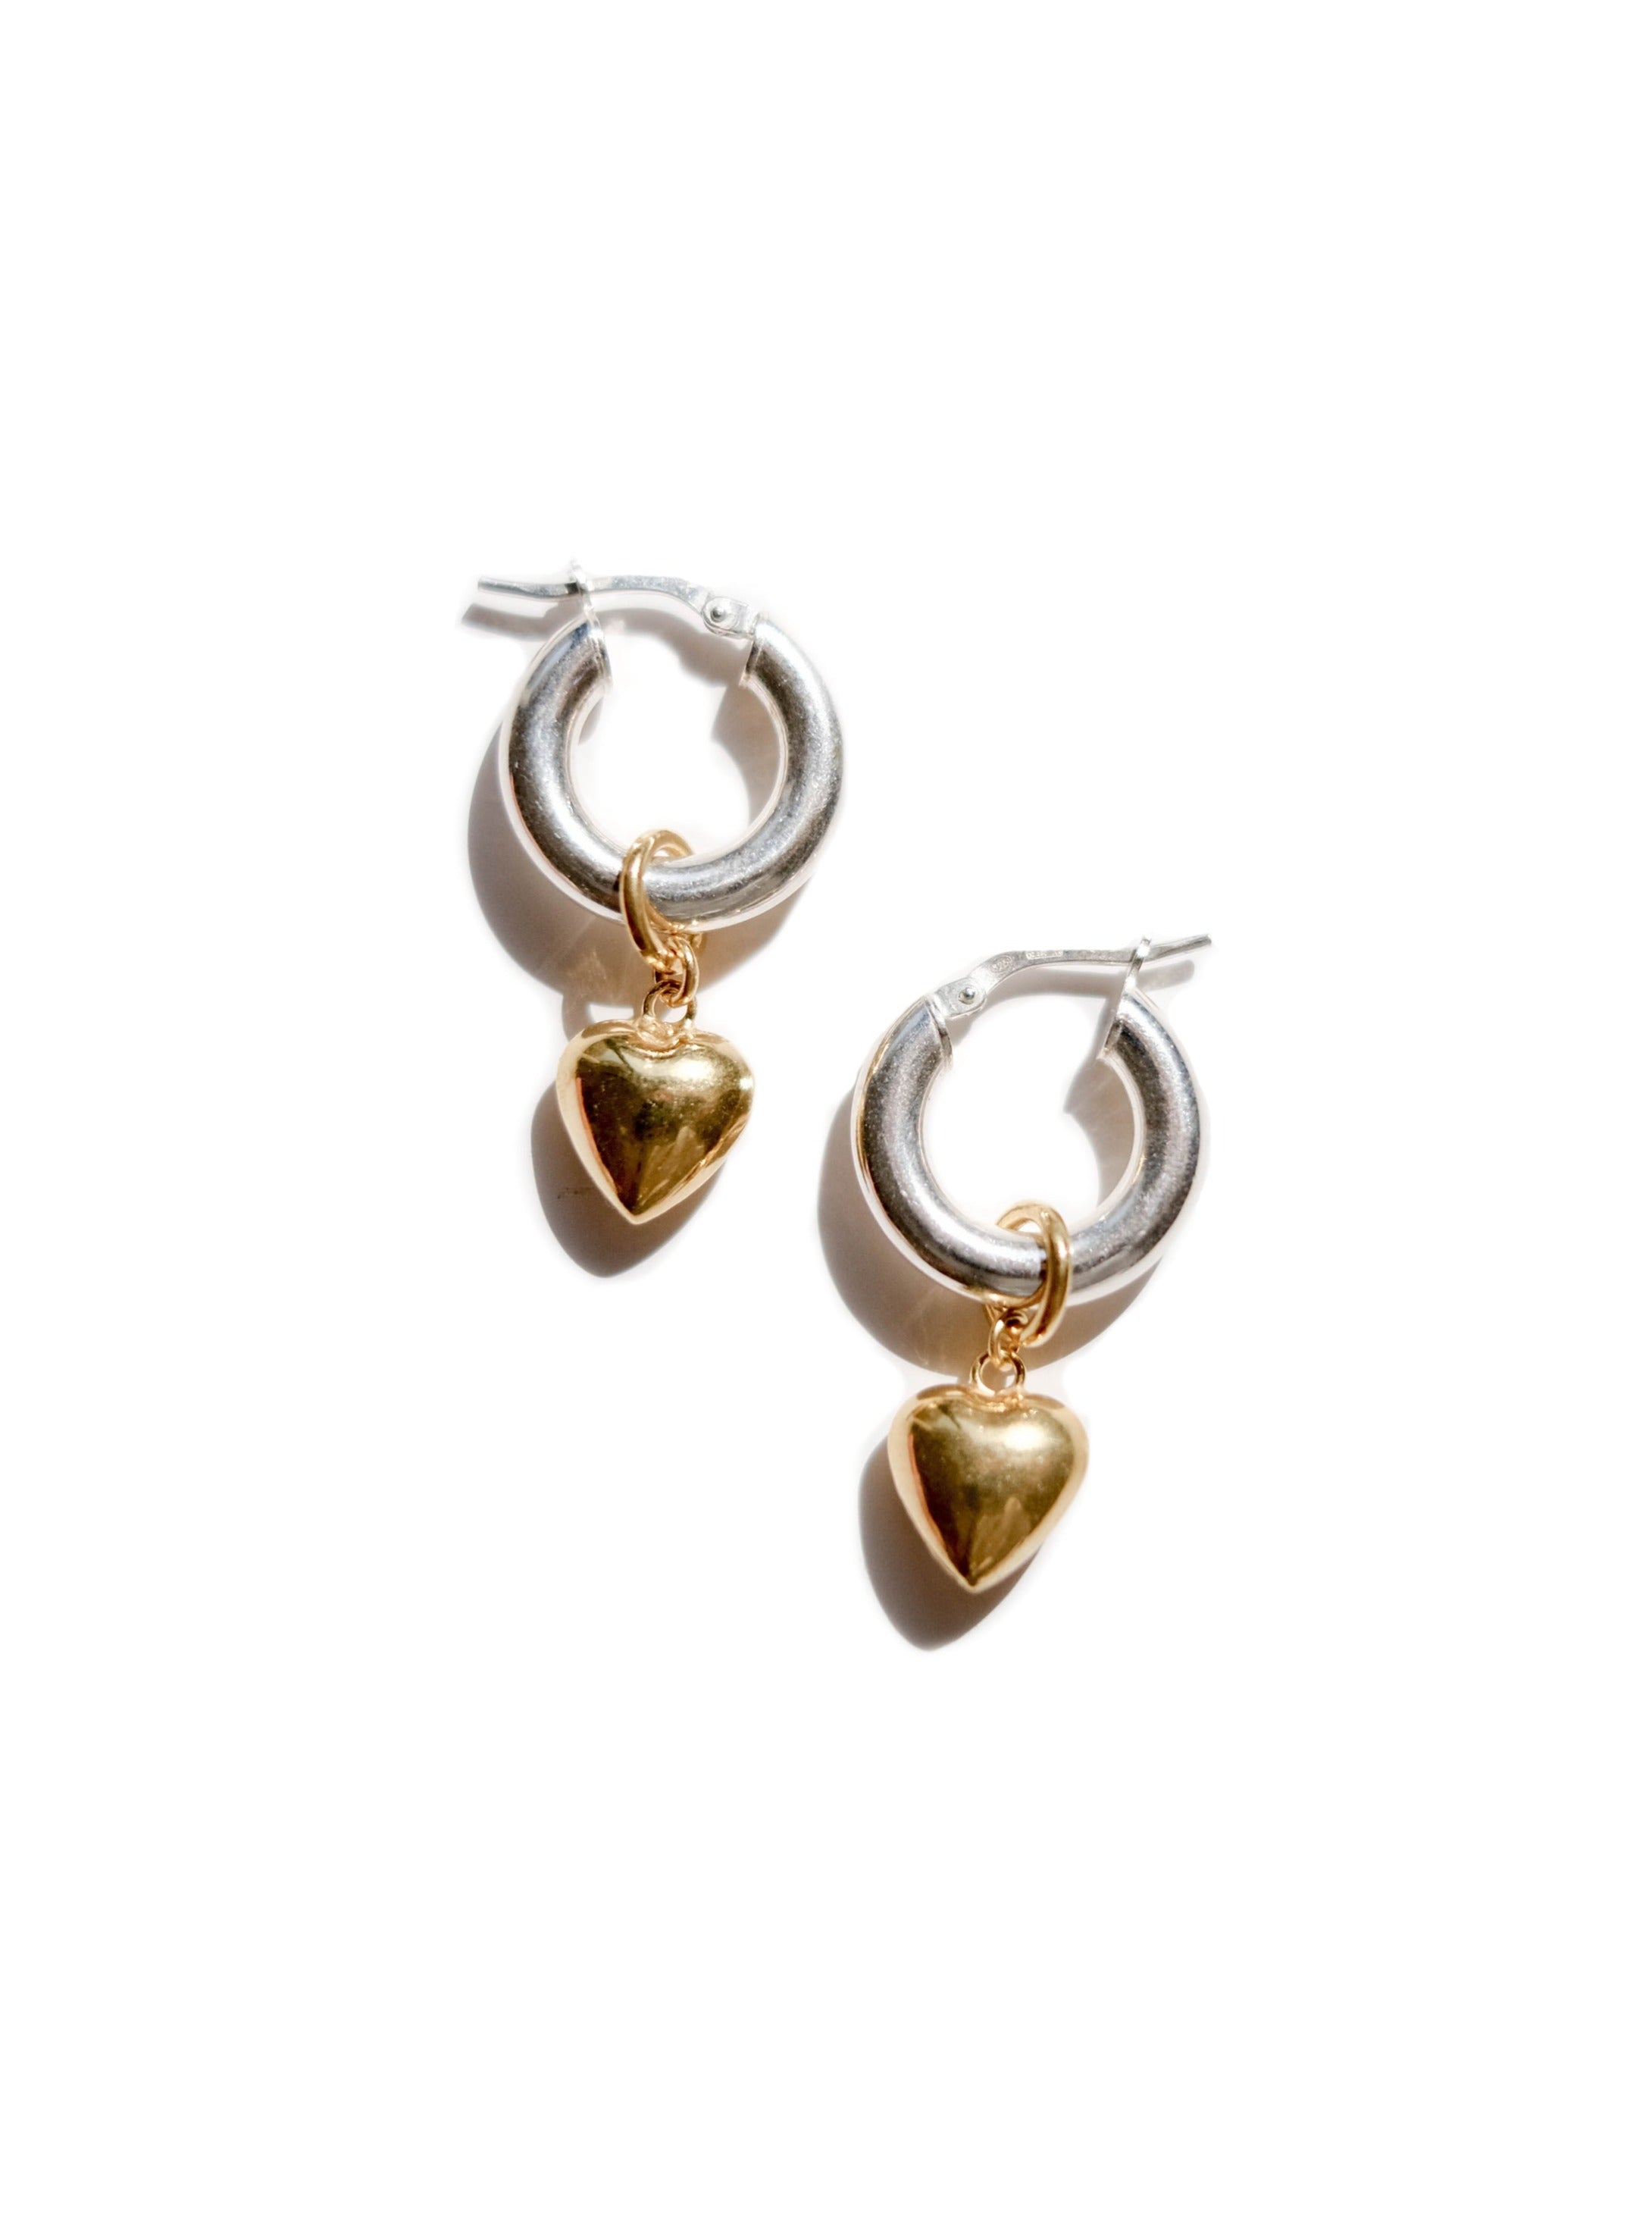 AMORE earrings